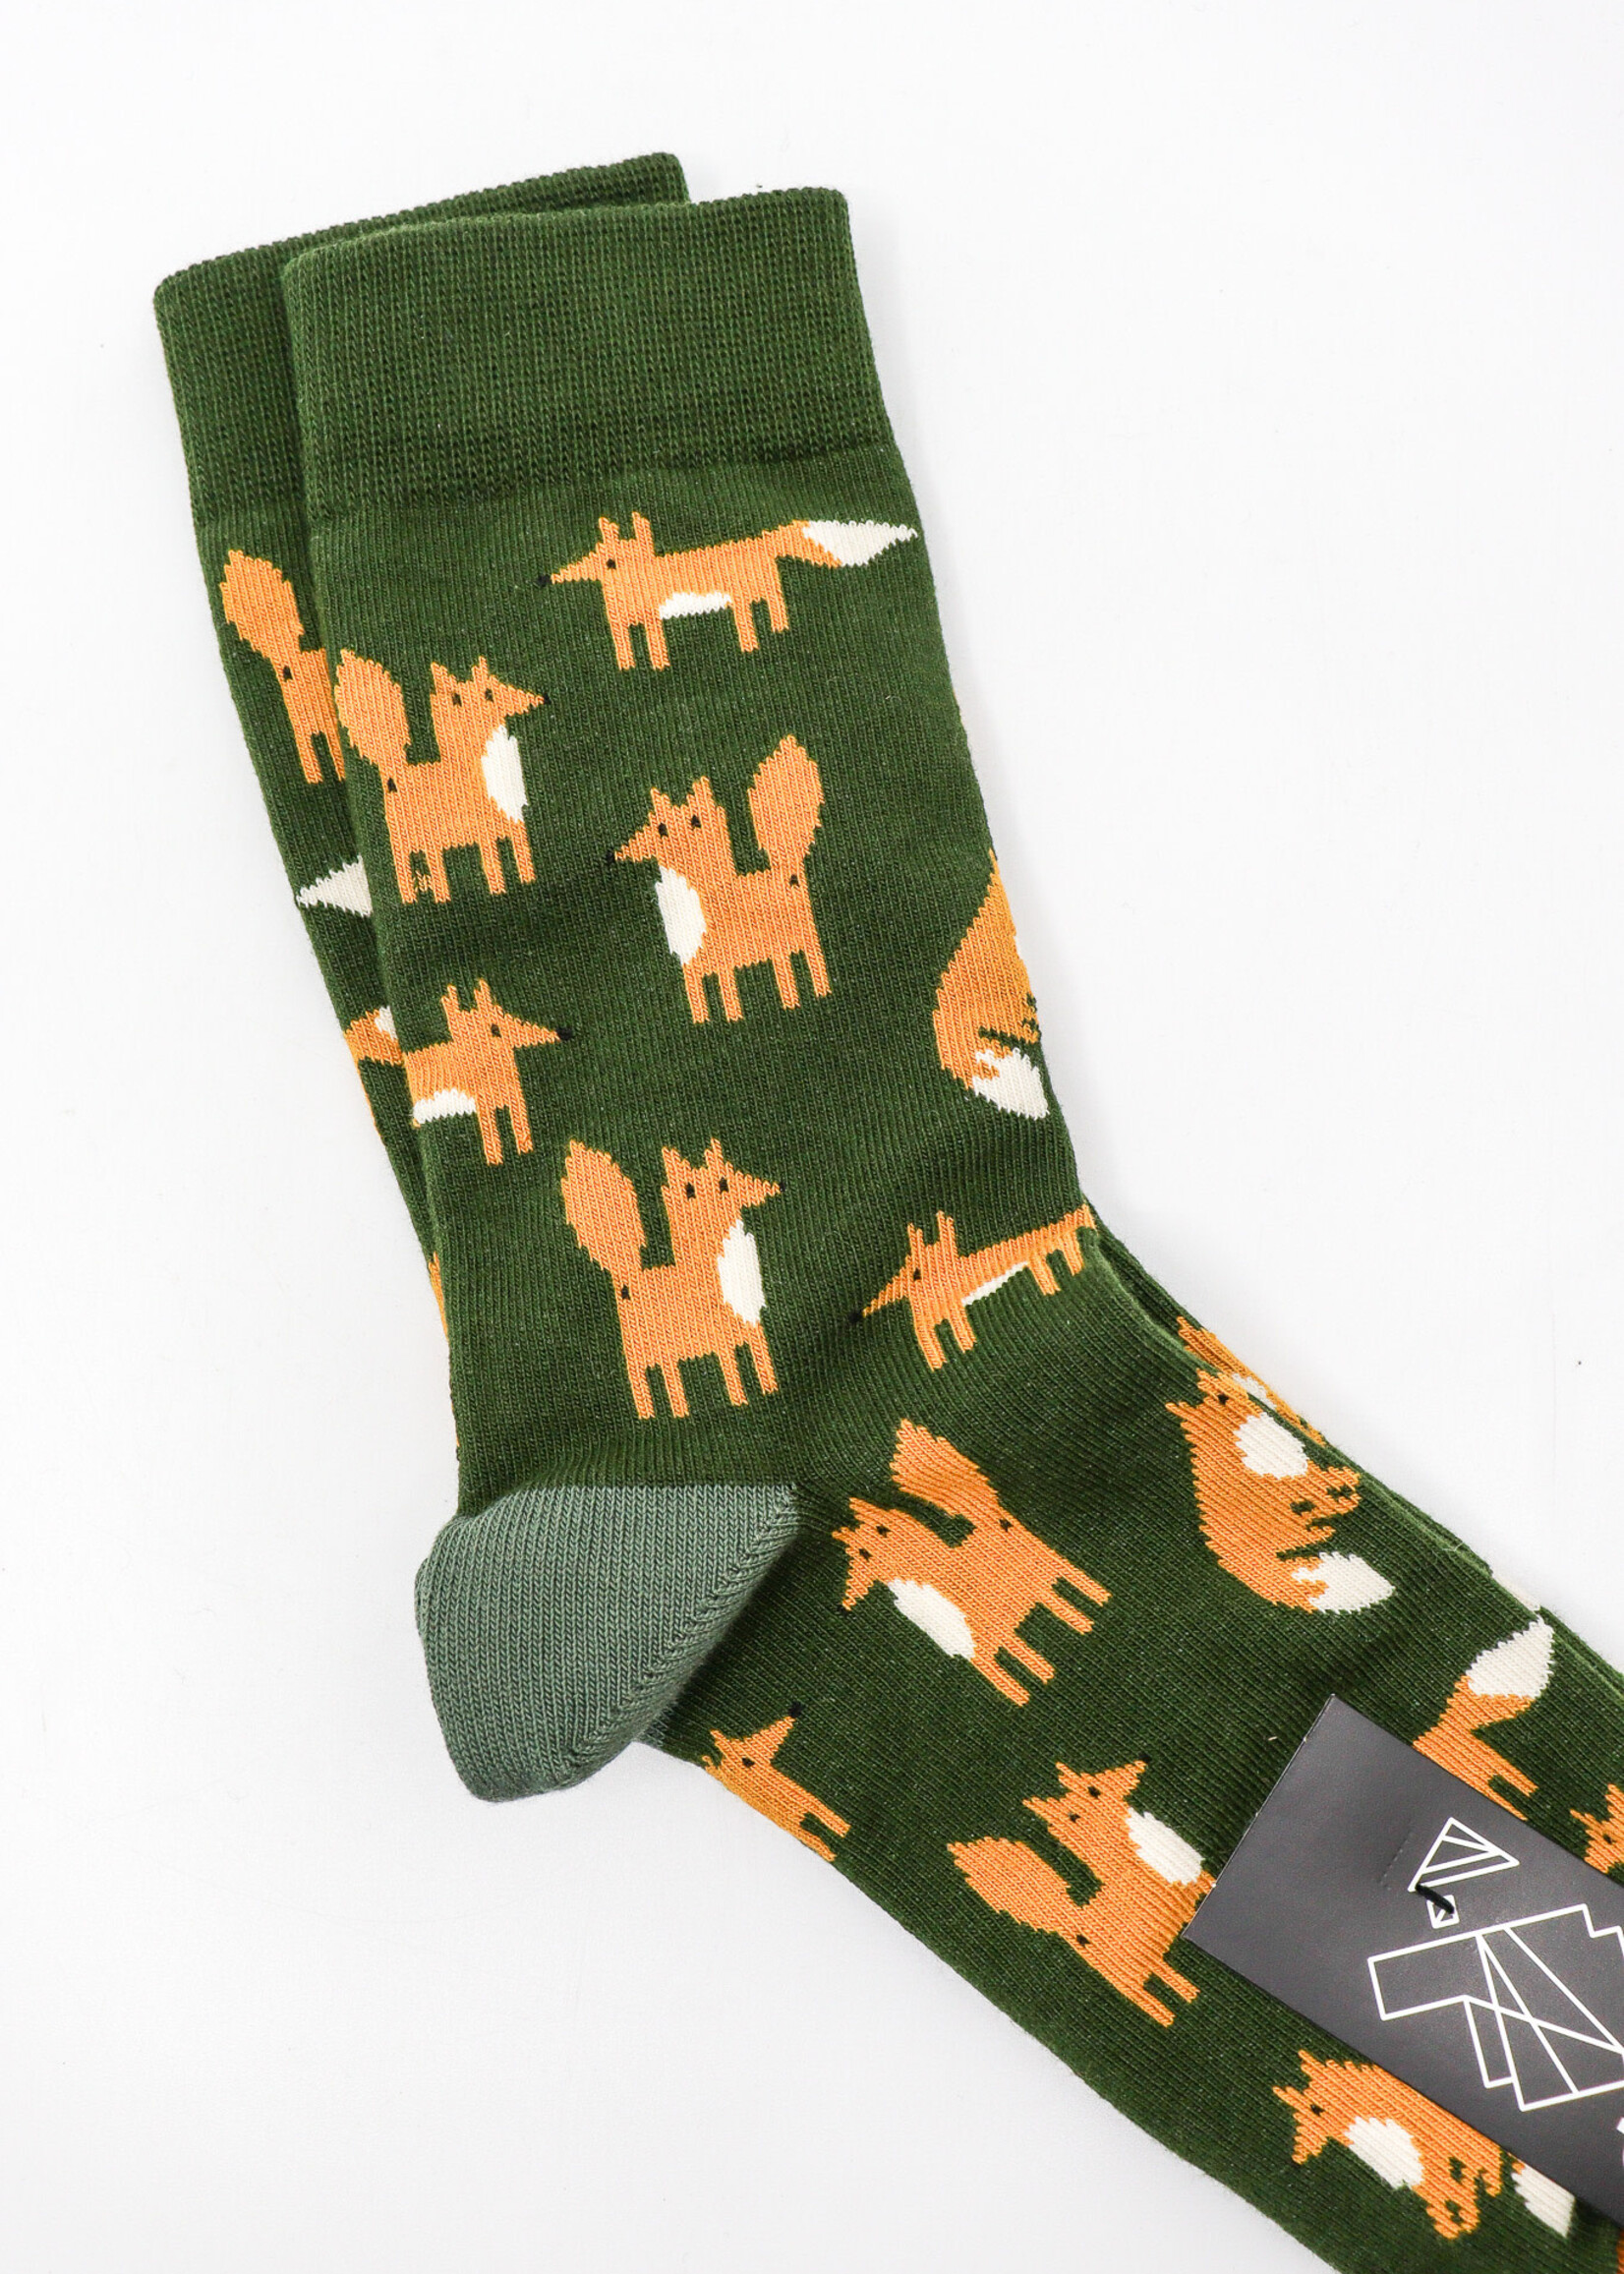 APPAREL - Foxes, socks  / made in Ukraine